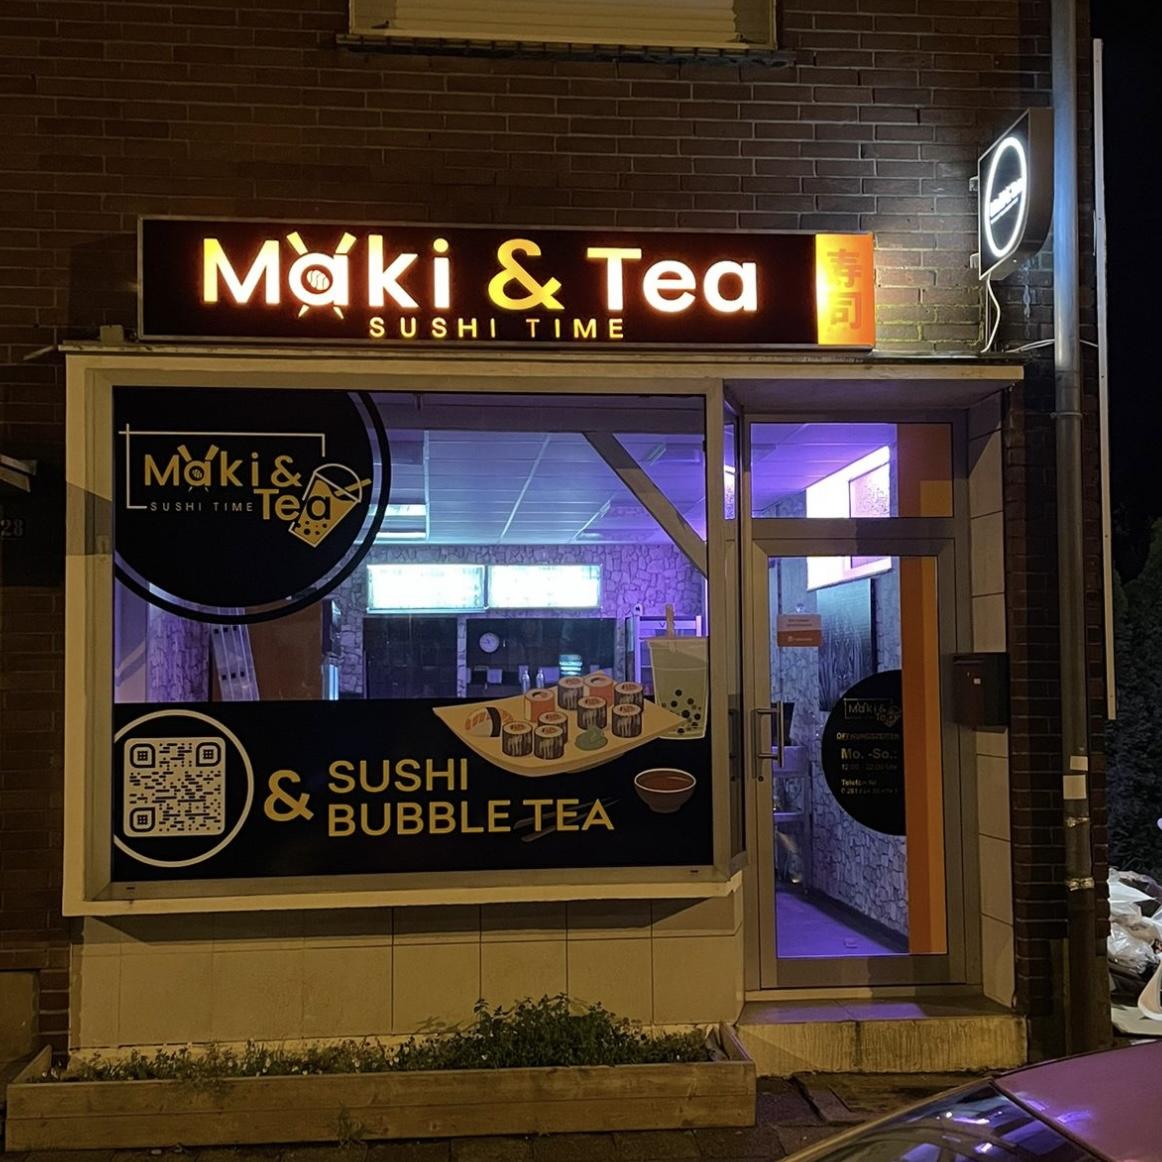 Restaurant "Maki&Tea" in Wesel